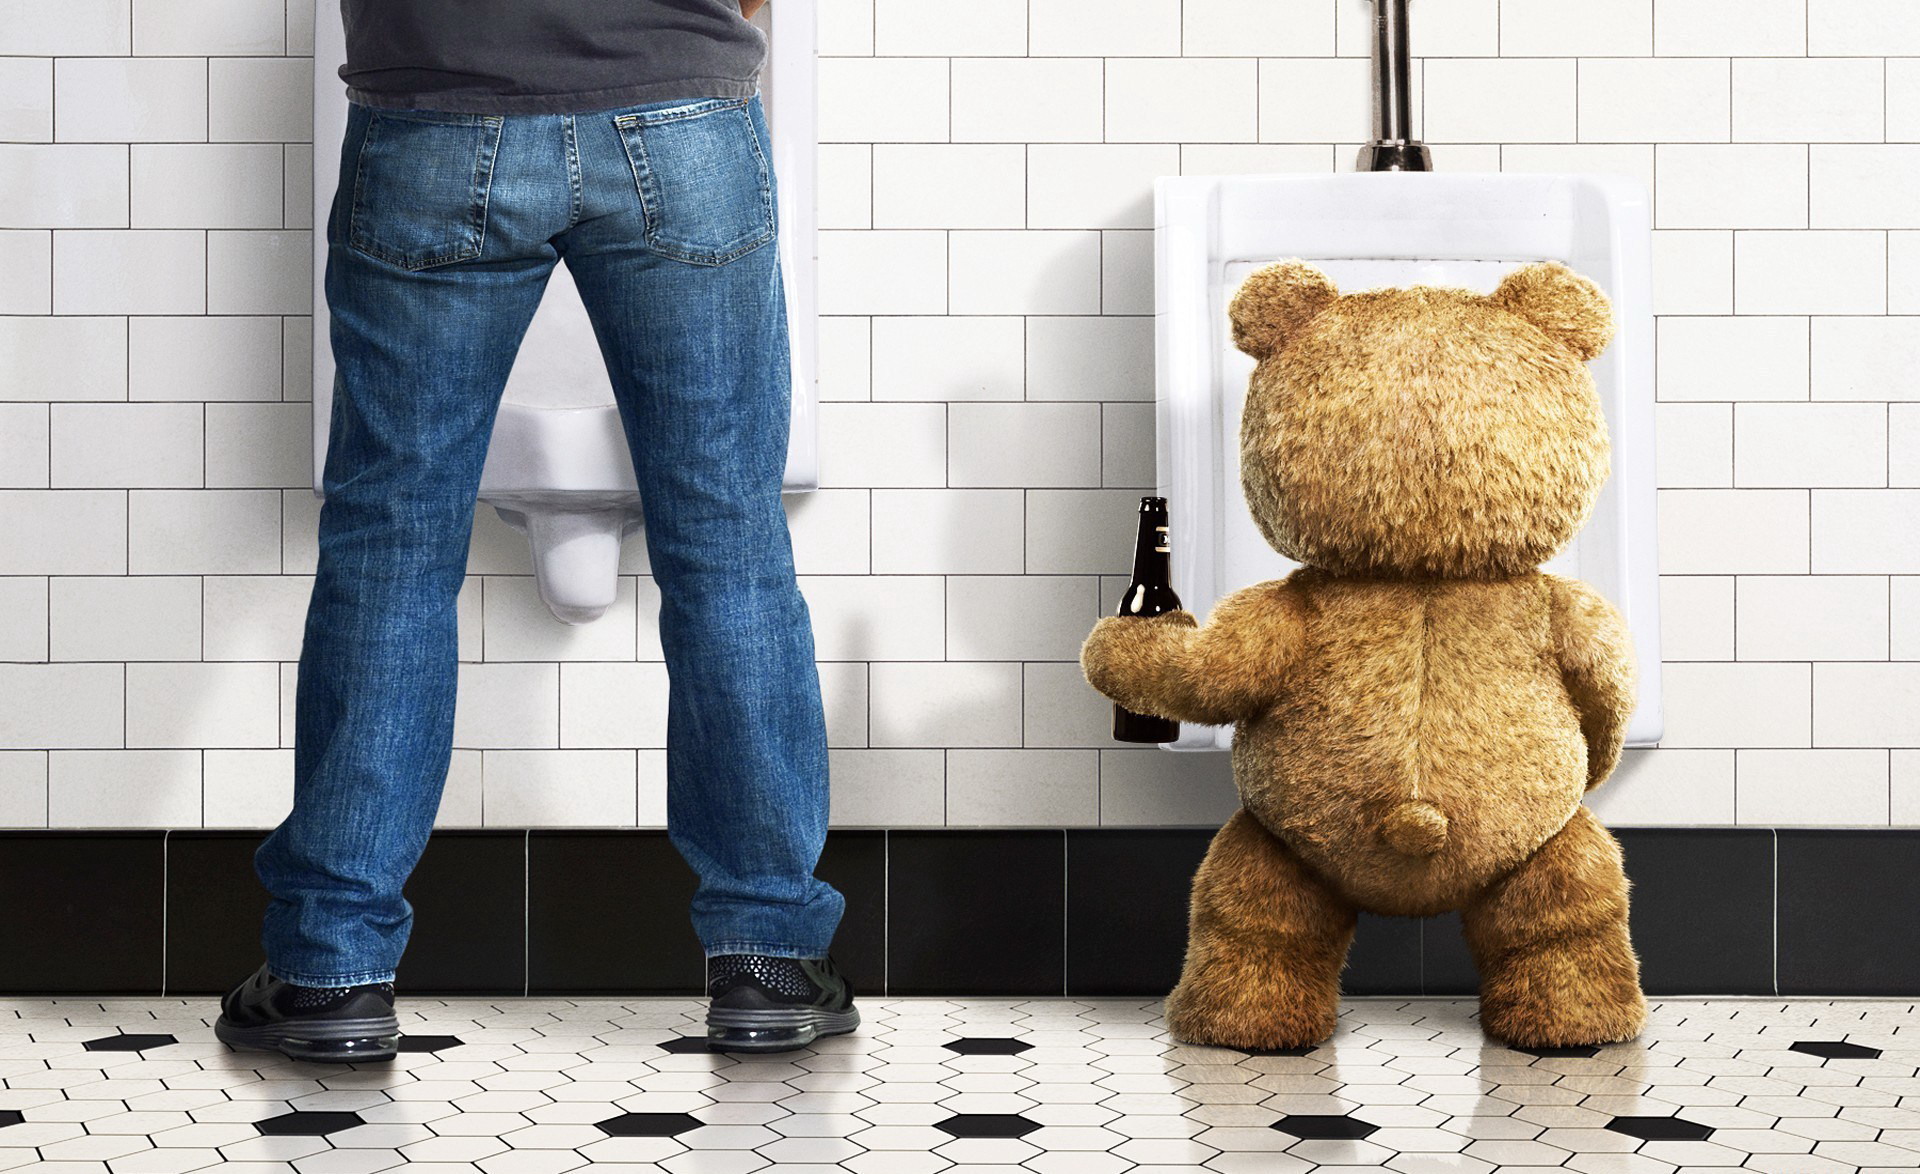 Movies Teddy Bears Toilets Ted Movie 1920x1174